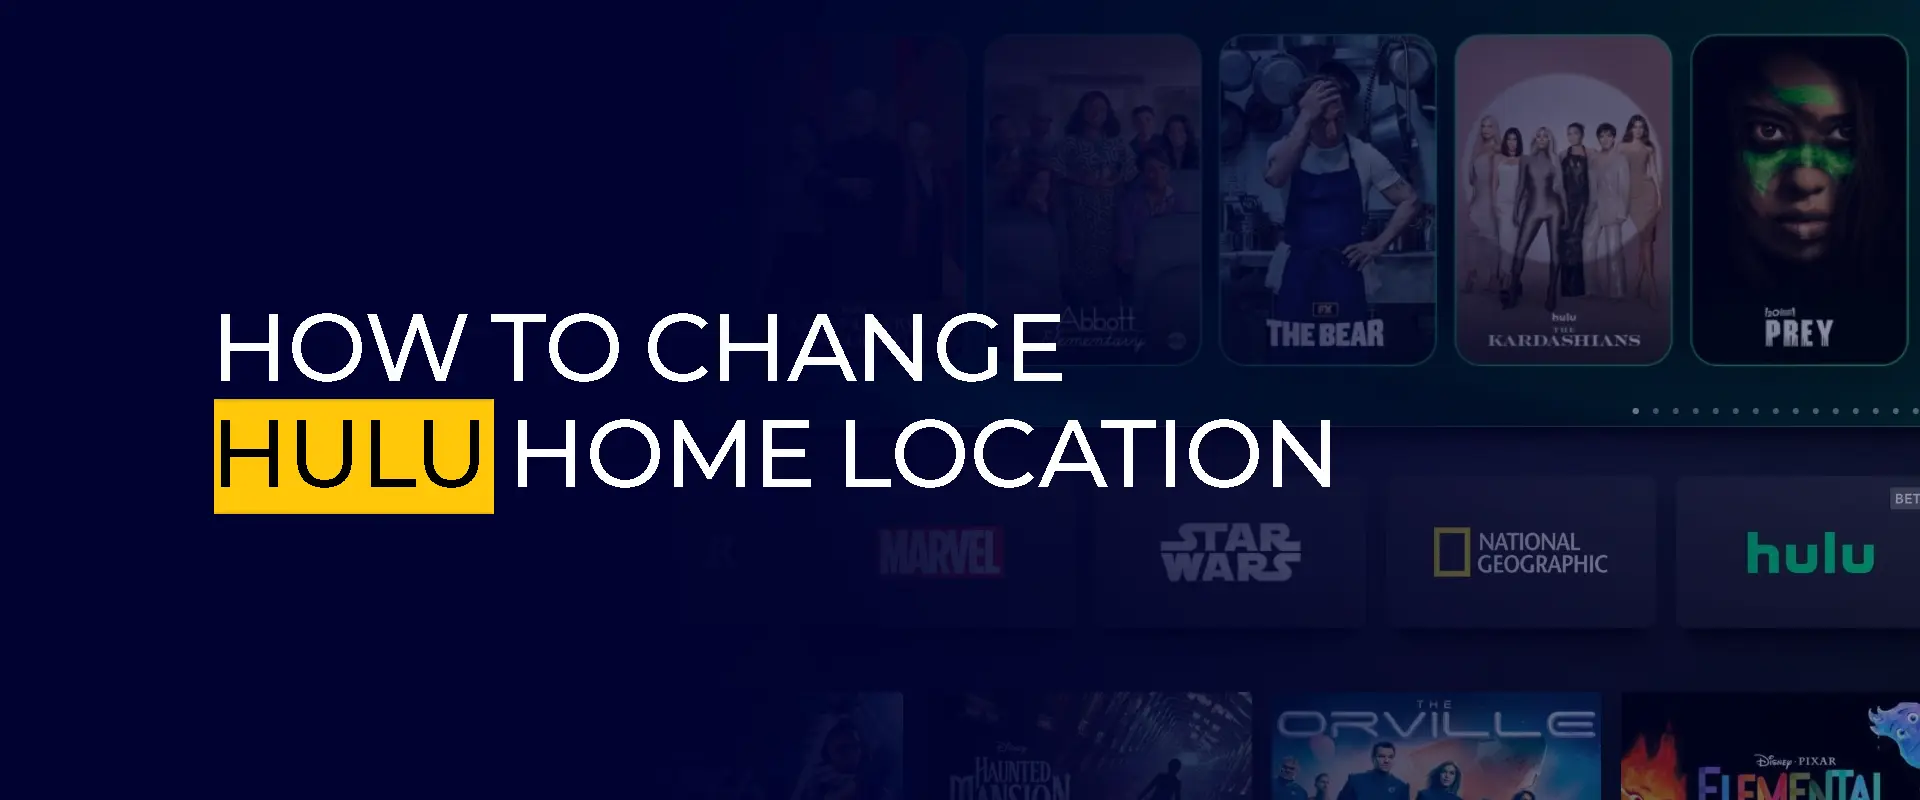 How to Change Hulu Home Location